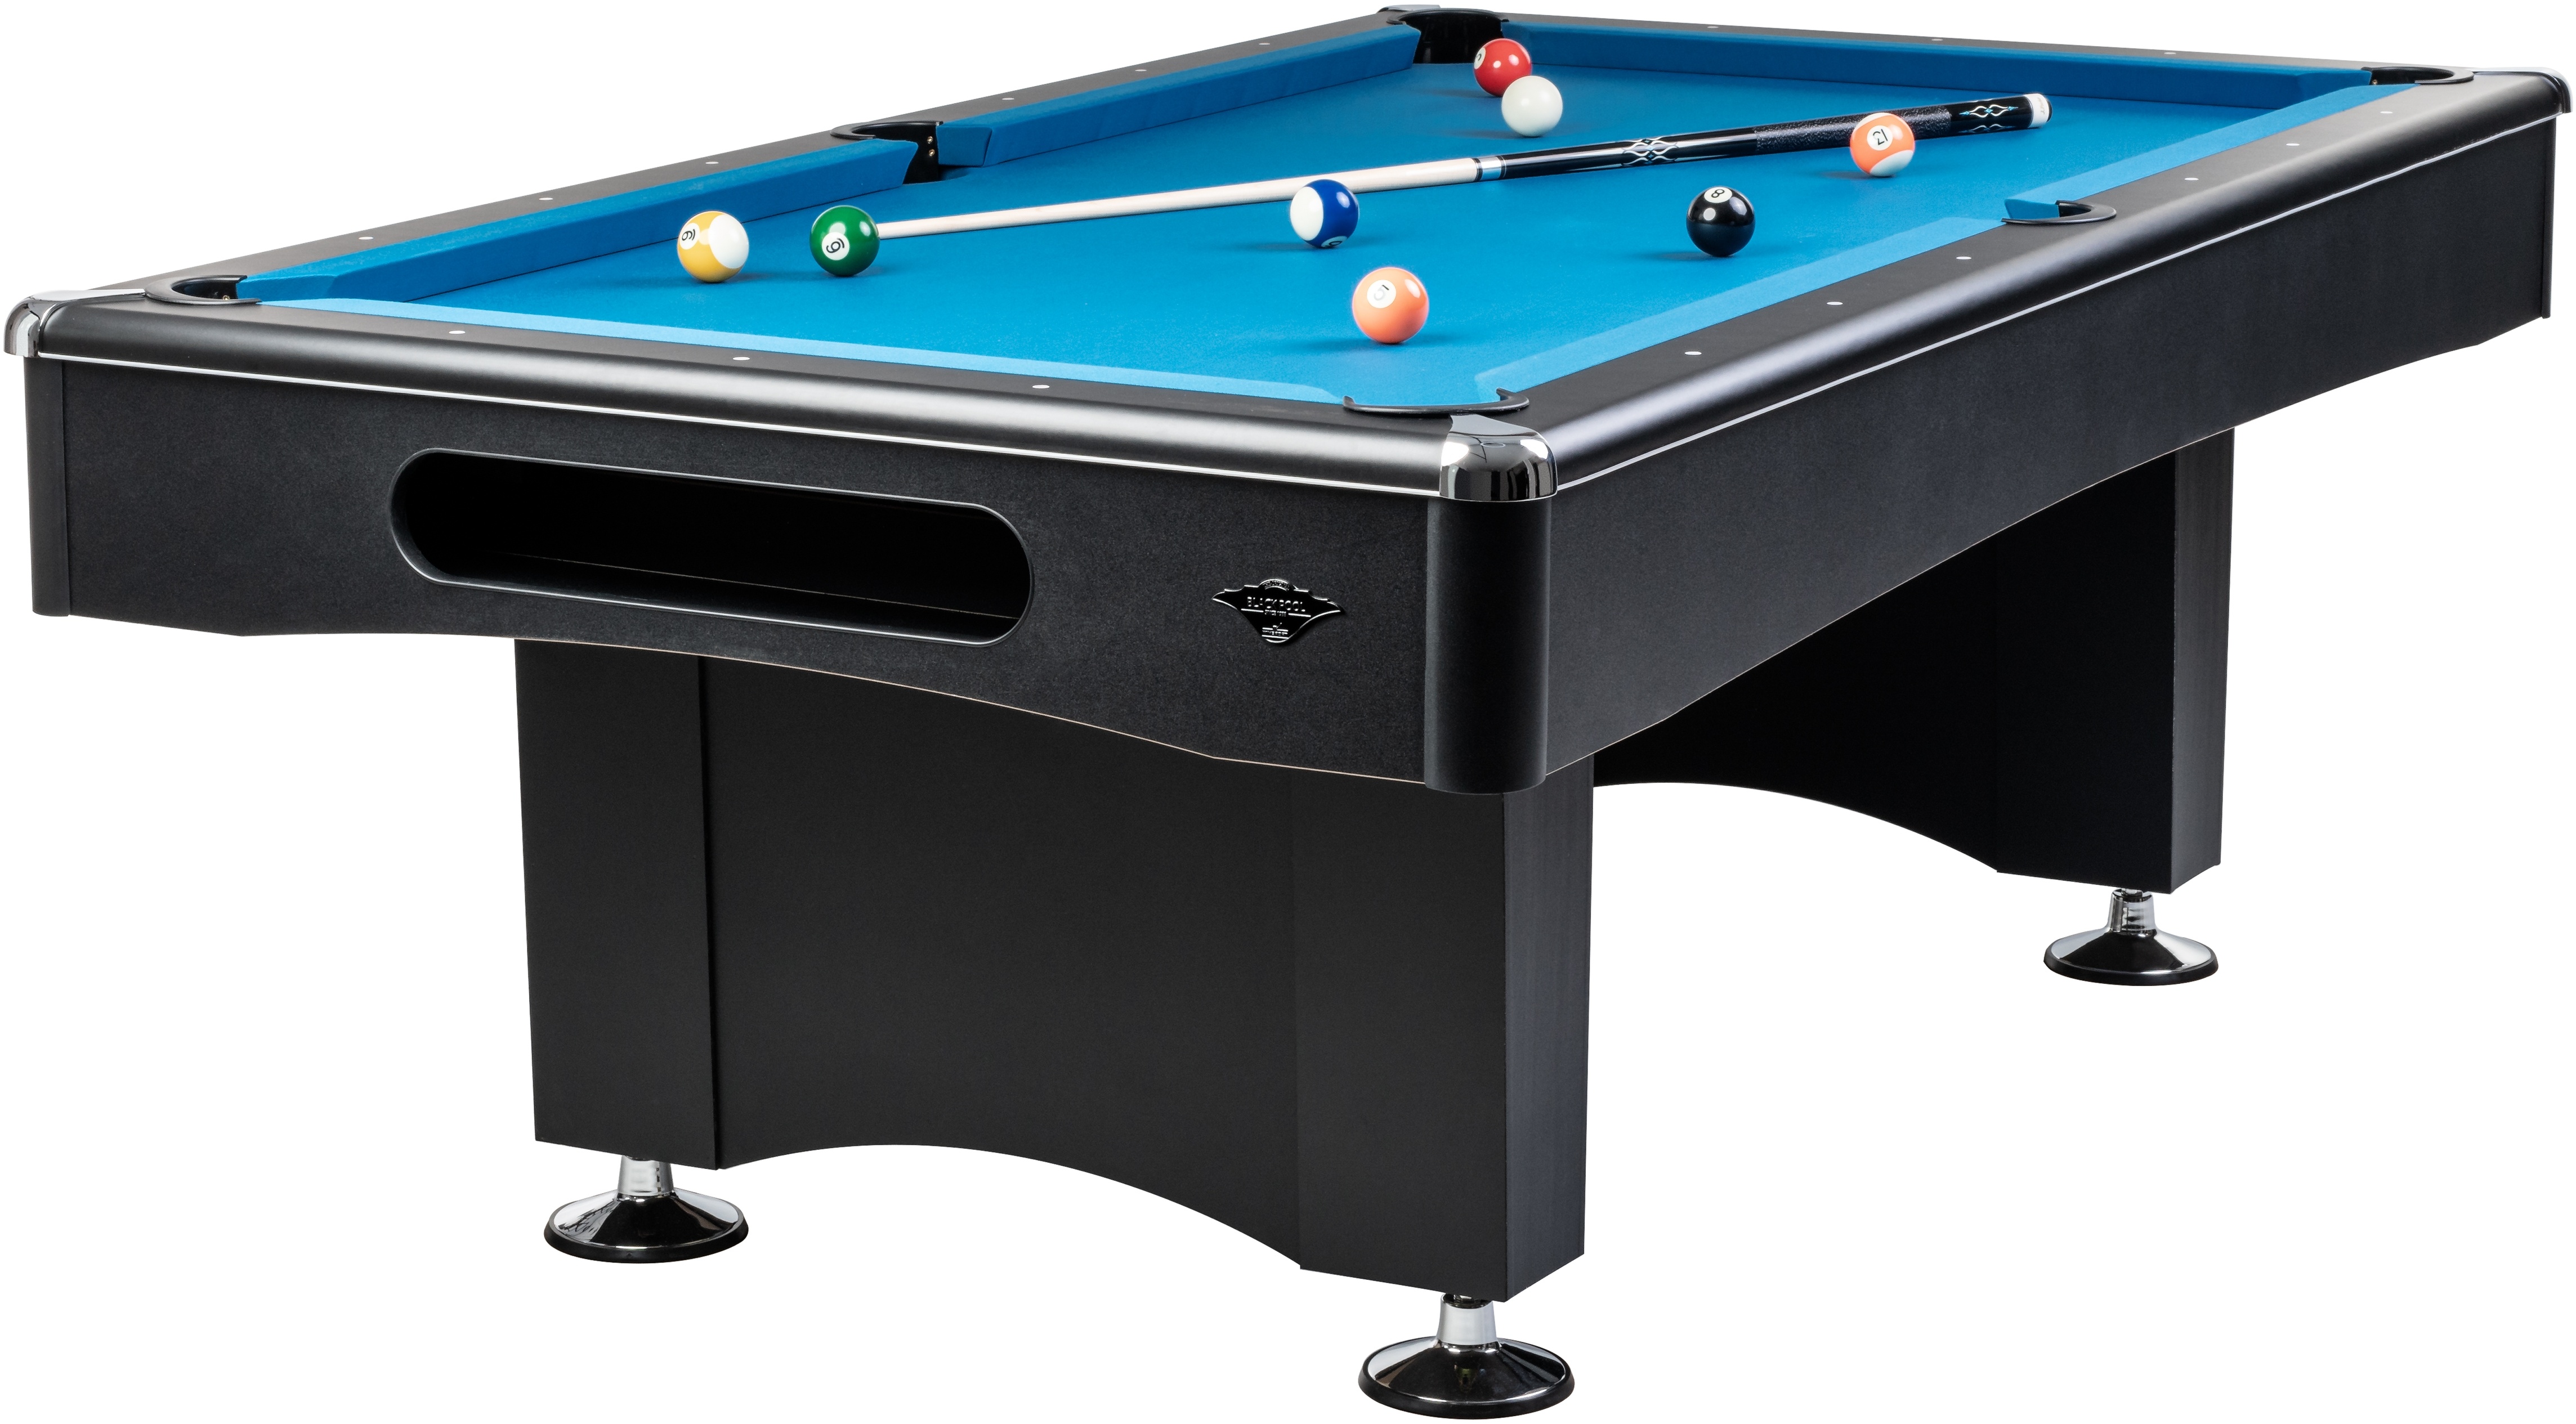 Winsport Poolbillardtisch "Black Pool 6 ft.",schwarz / blau,6 ft. / 212 x 121 cm